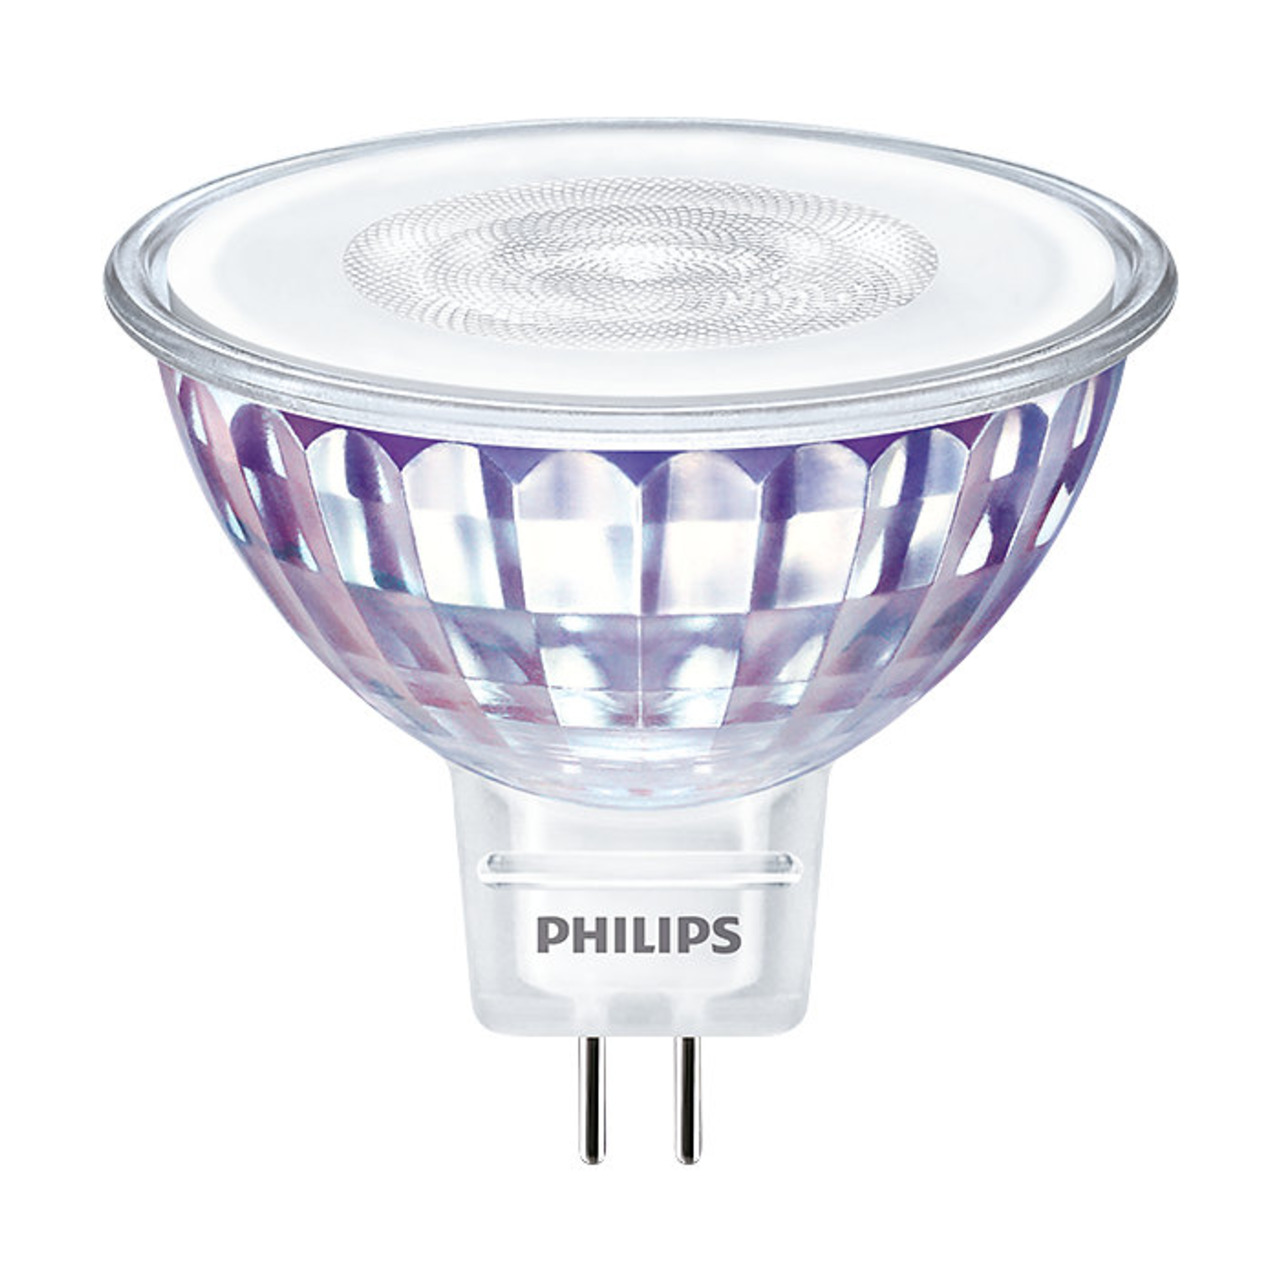 Philips 5-8-W-GU5-3-LED-Lampe Master LEDspot Value- MR16- 460 lm- warmweiss (3000 K)- 36- dimmbar unter Beleuchtung